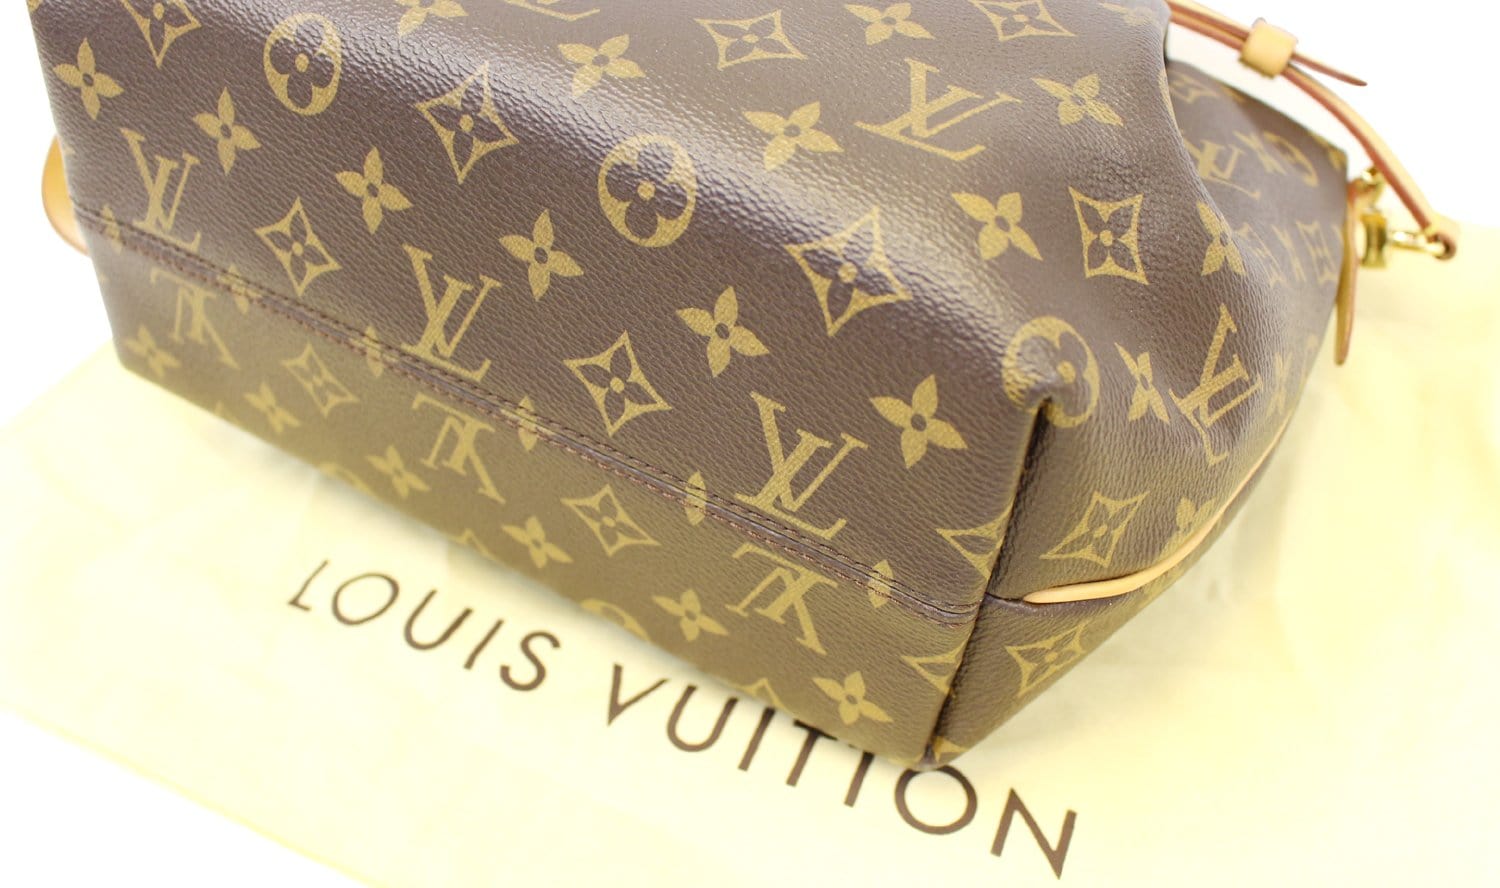 Louis Vuitton Turenne PM monogram With pb strap n receipt 2016 VGC  @11.000.000